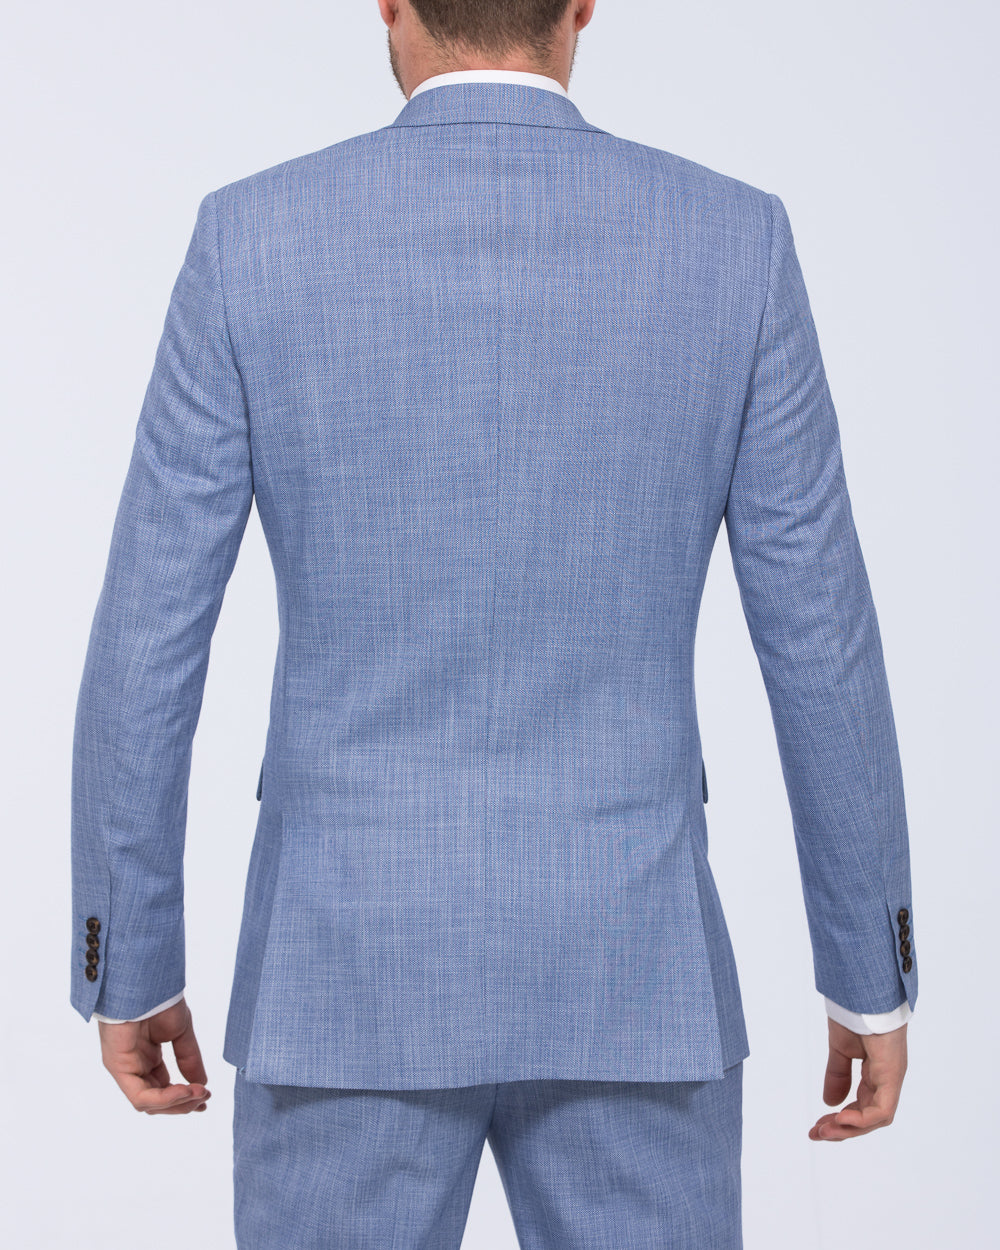 Skopes Redding Slim Fit Tall Suit Jacket (sky blue)